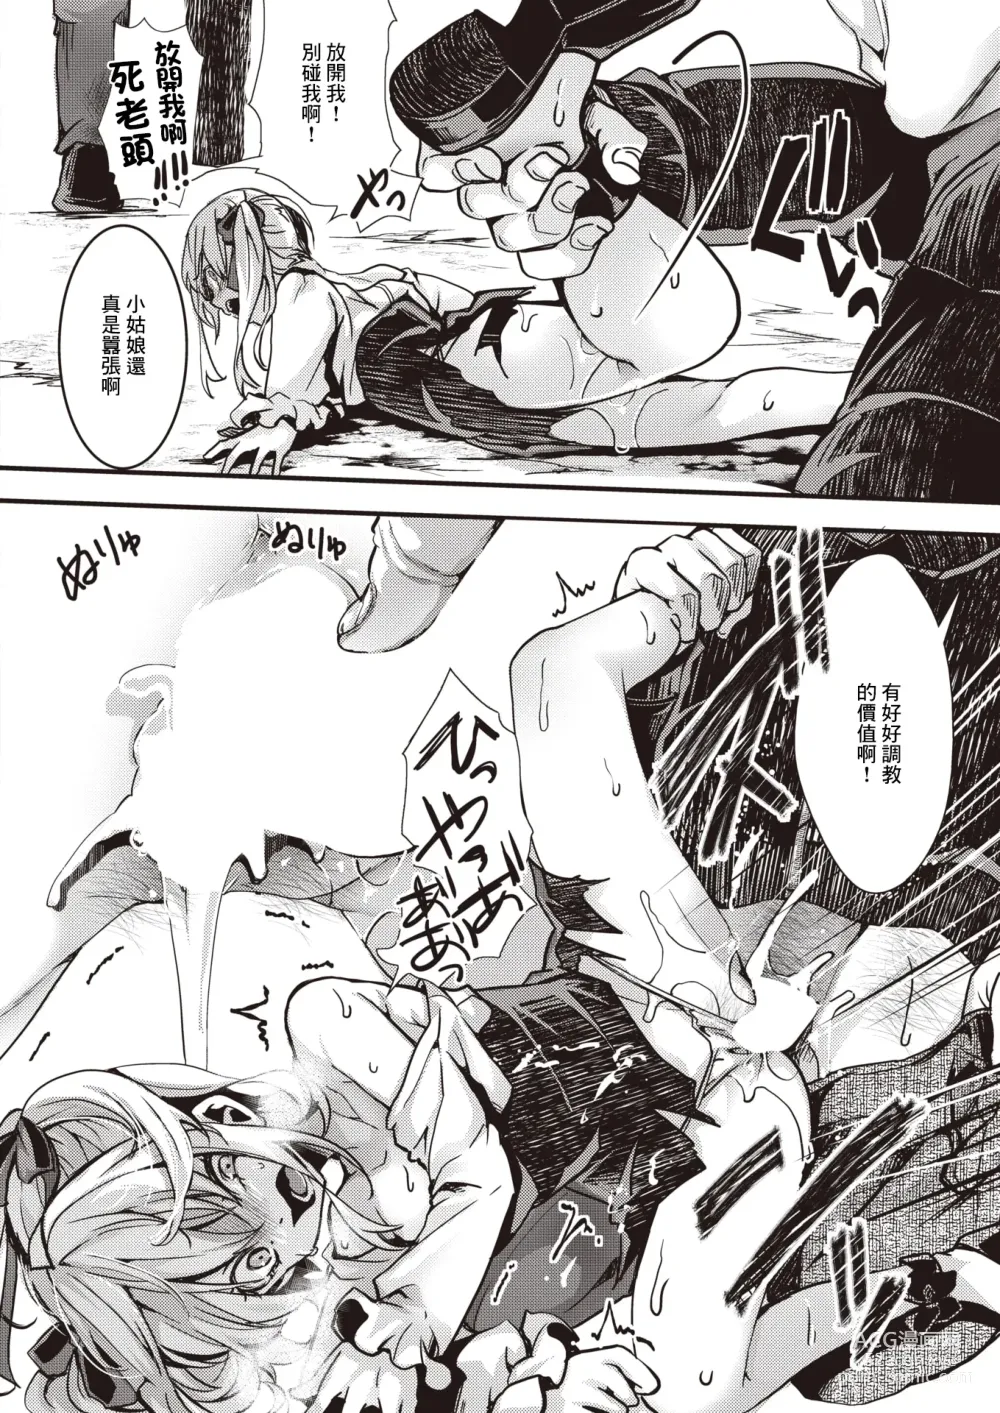 Page 4 of manga Itadaki Joou Mimi-chan vs Kouen Sumi Oji Rengou